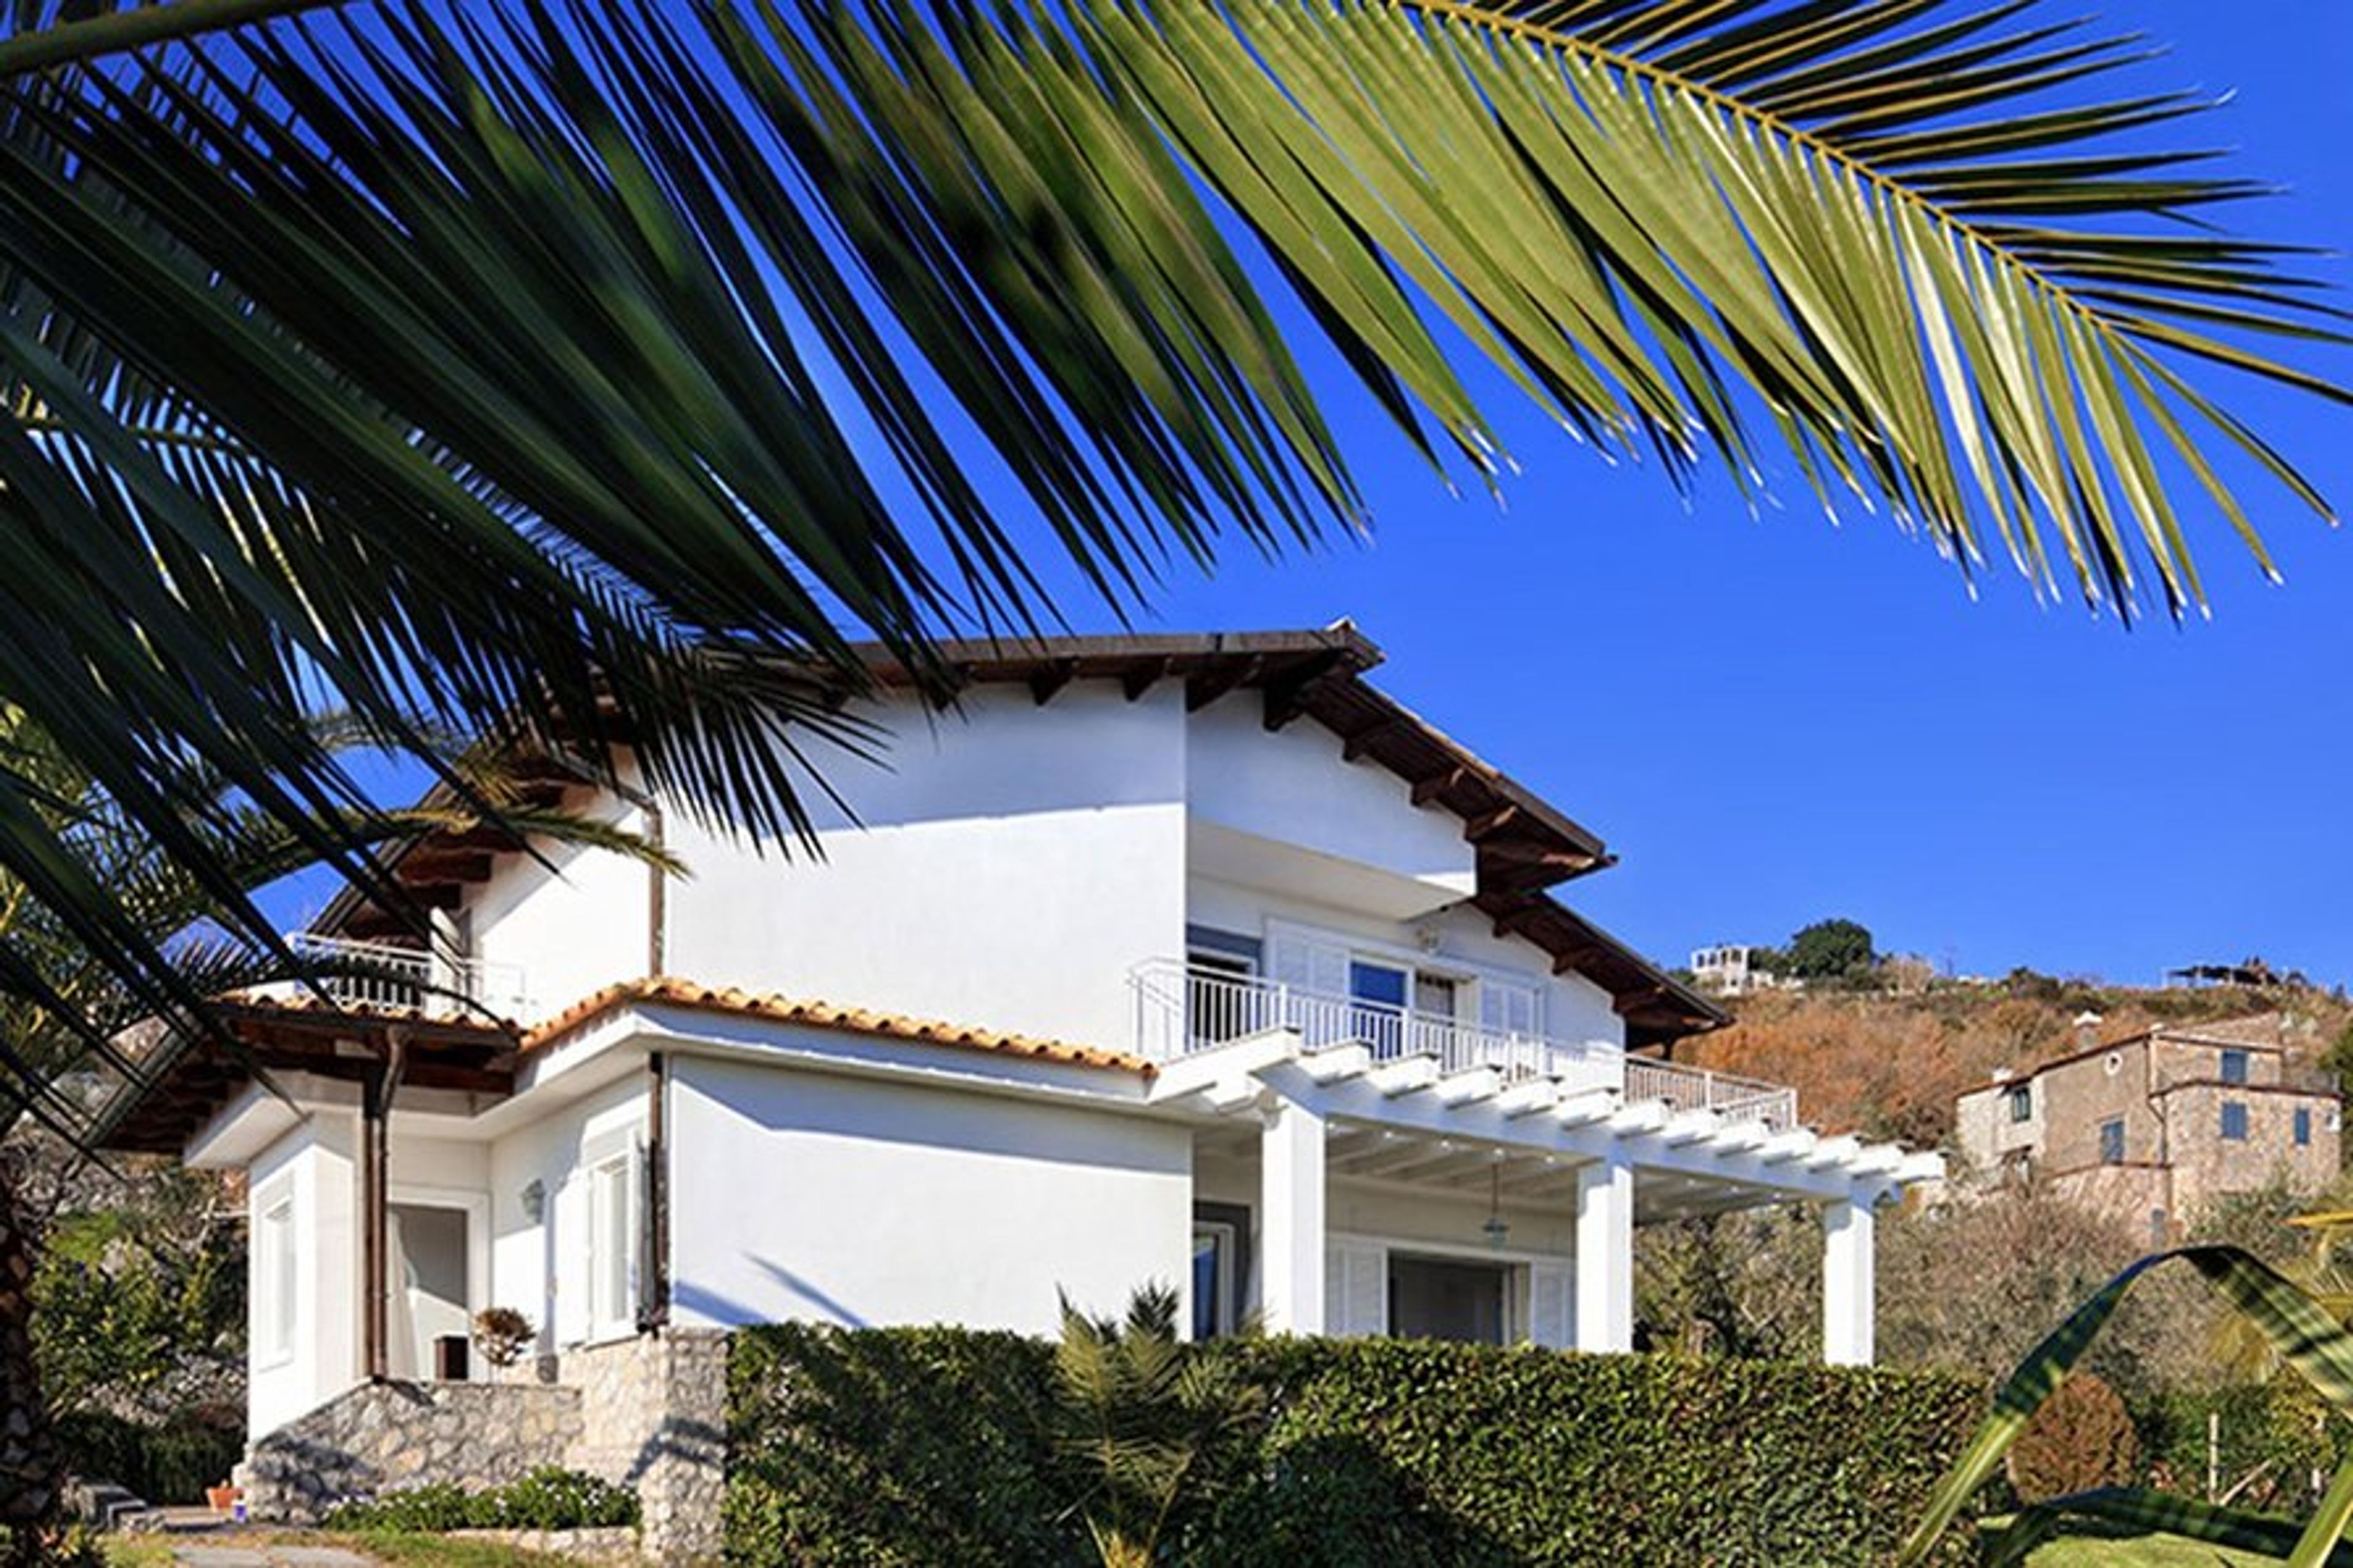 Villa Aldo holidays up accommodation amalfi coastline booking rentals